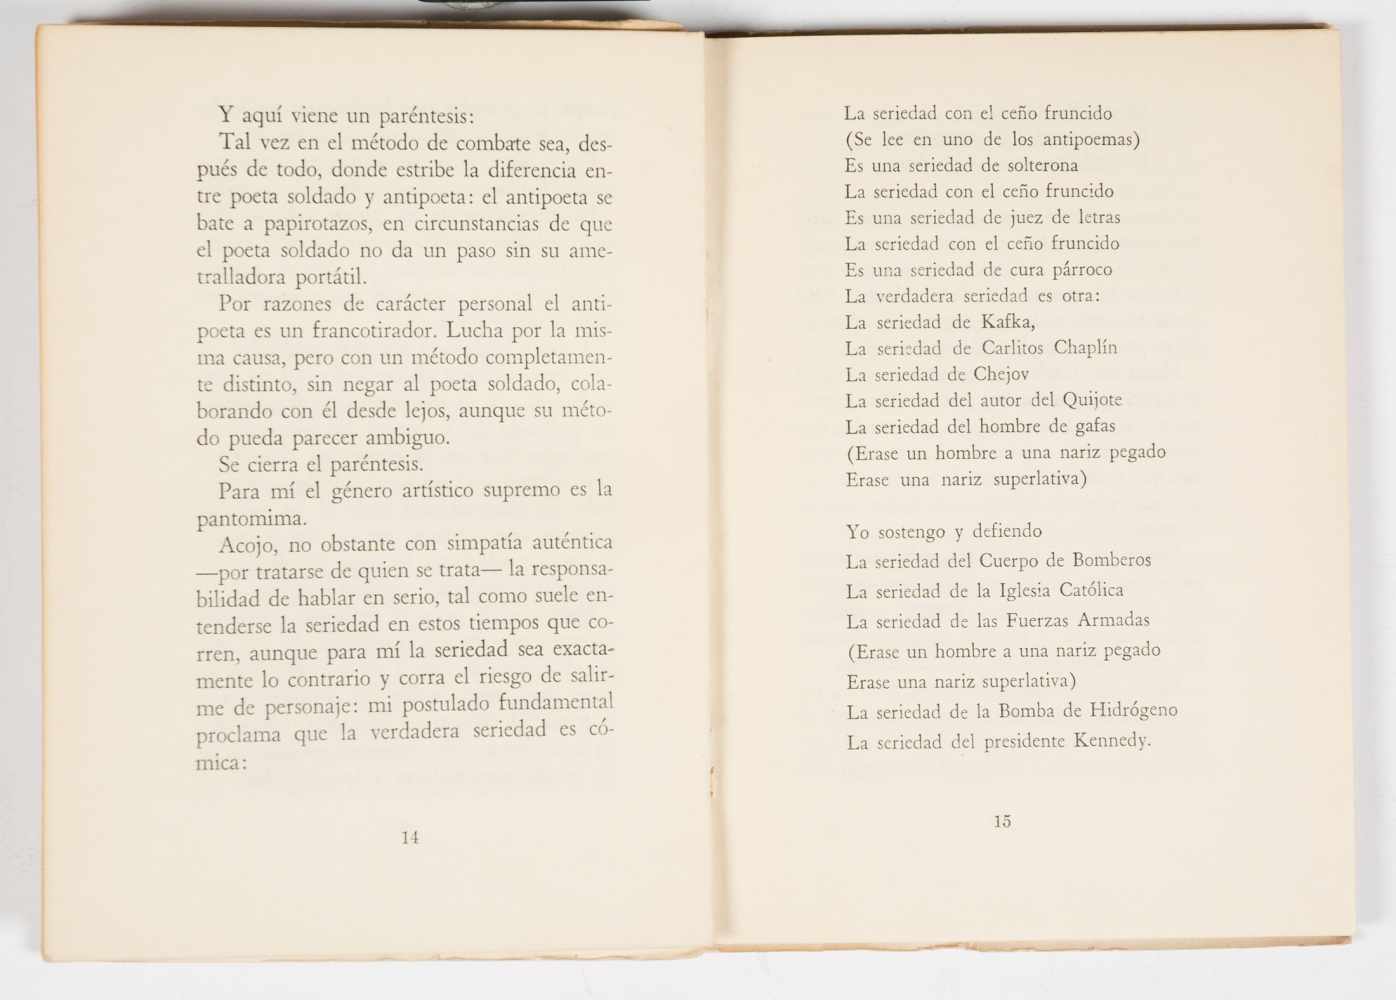 Neruda, Pablo; Parra, Nicanor. "Discursos" (Speeches). 1st edition. Santiago de Chile: Published - Image 4 of 4